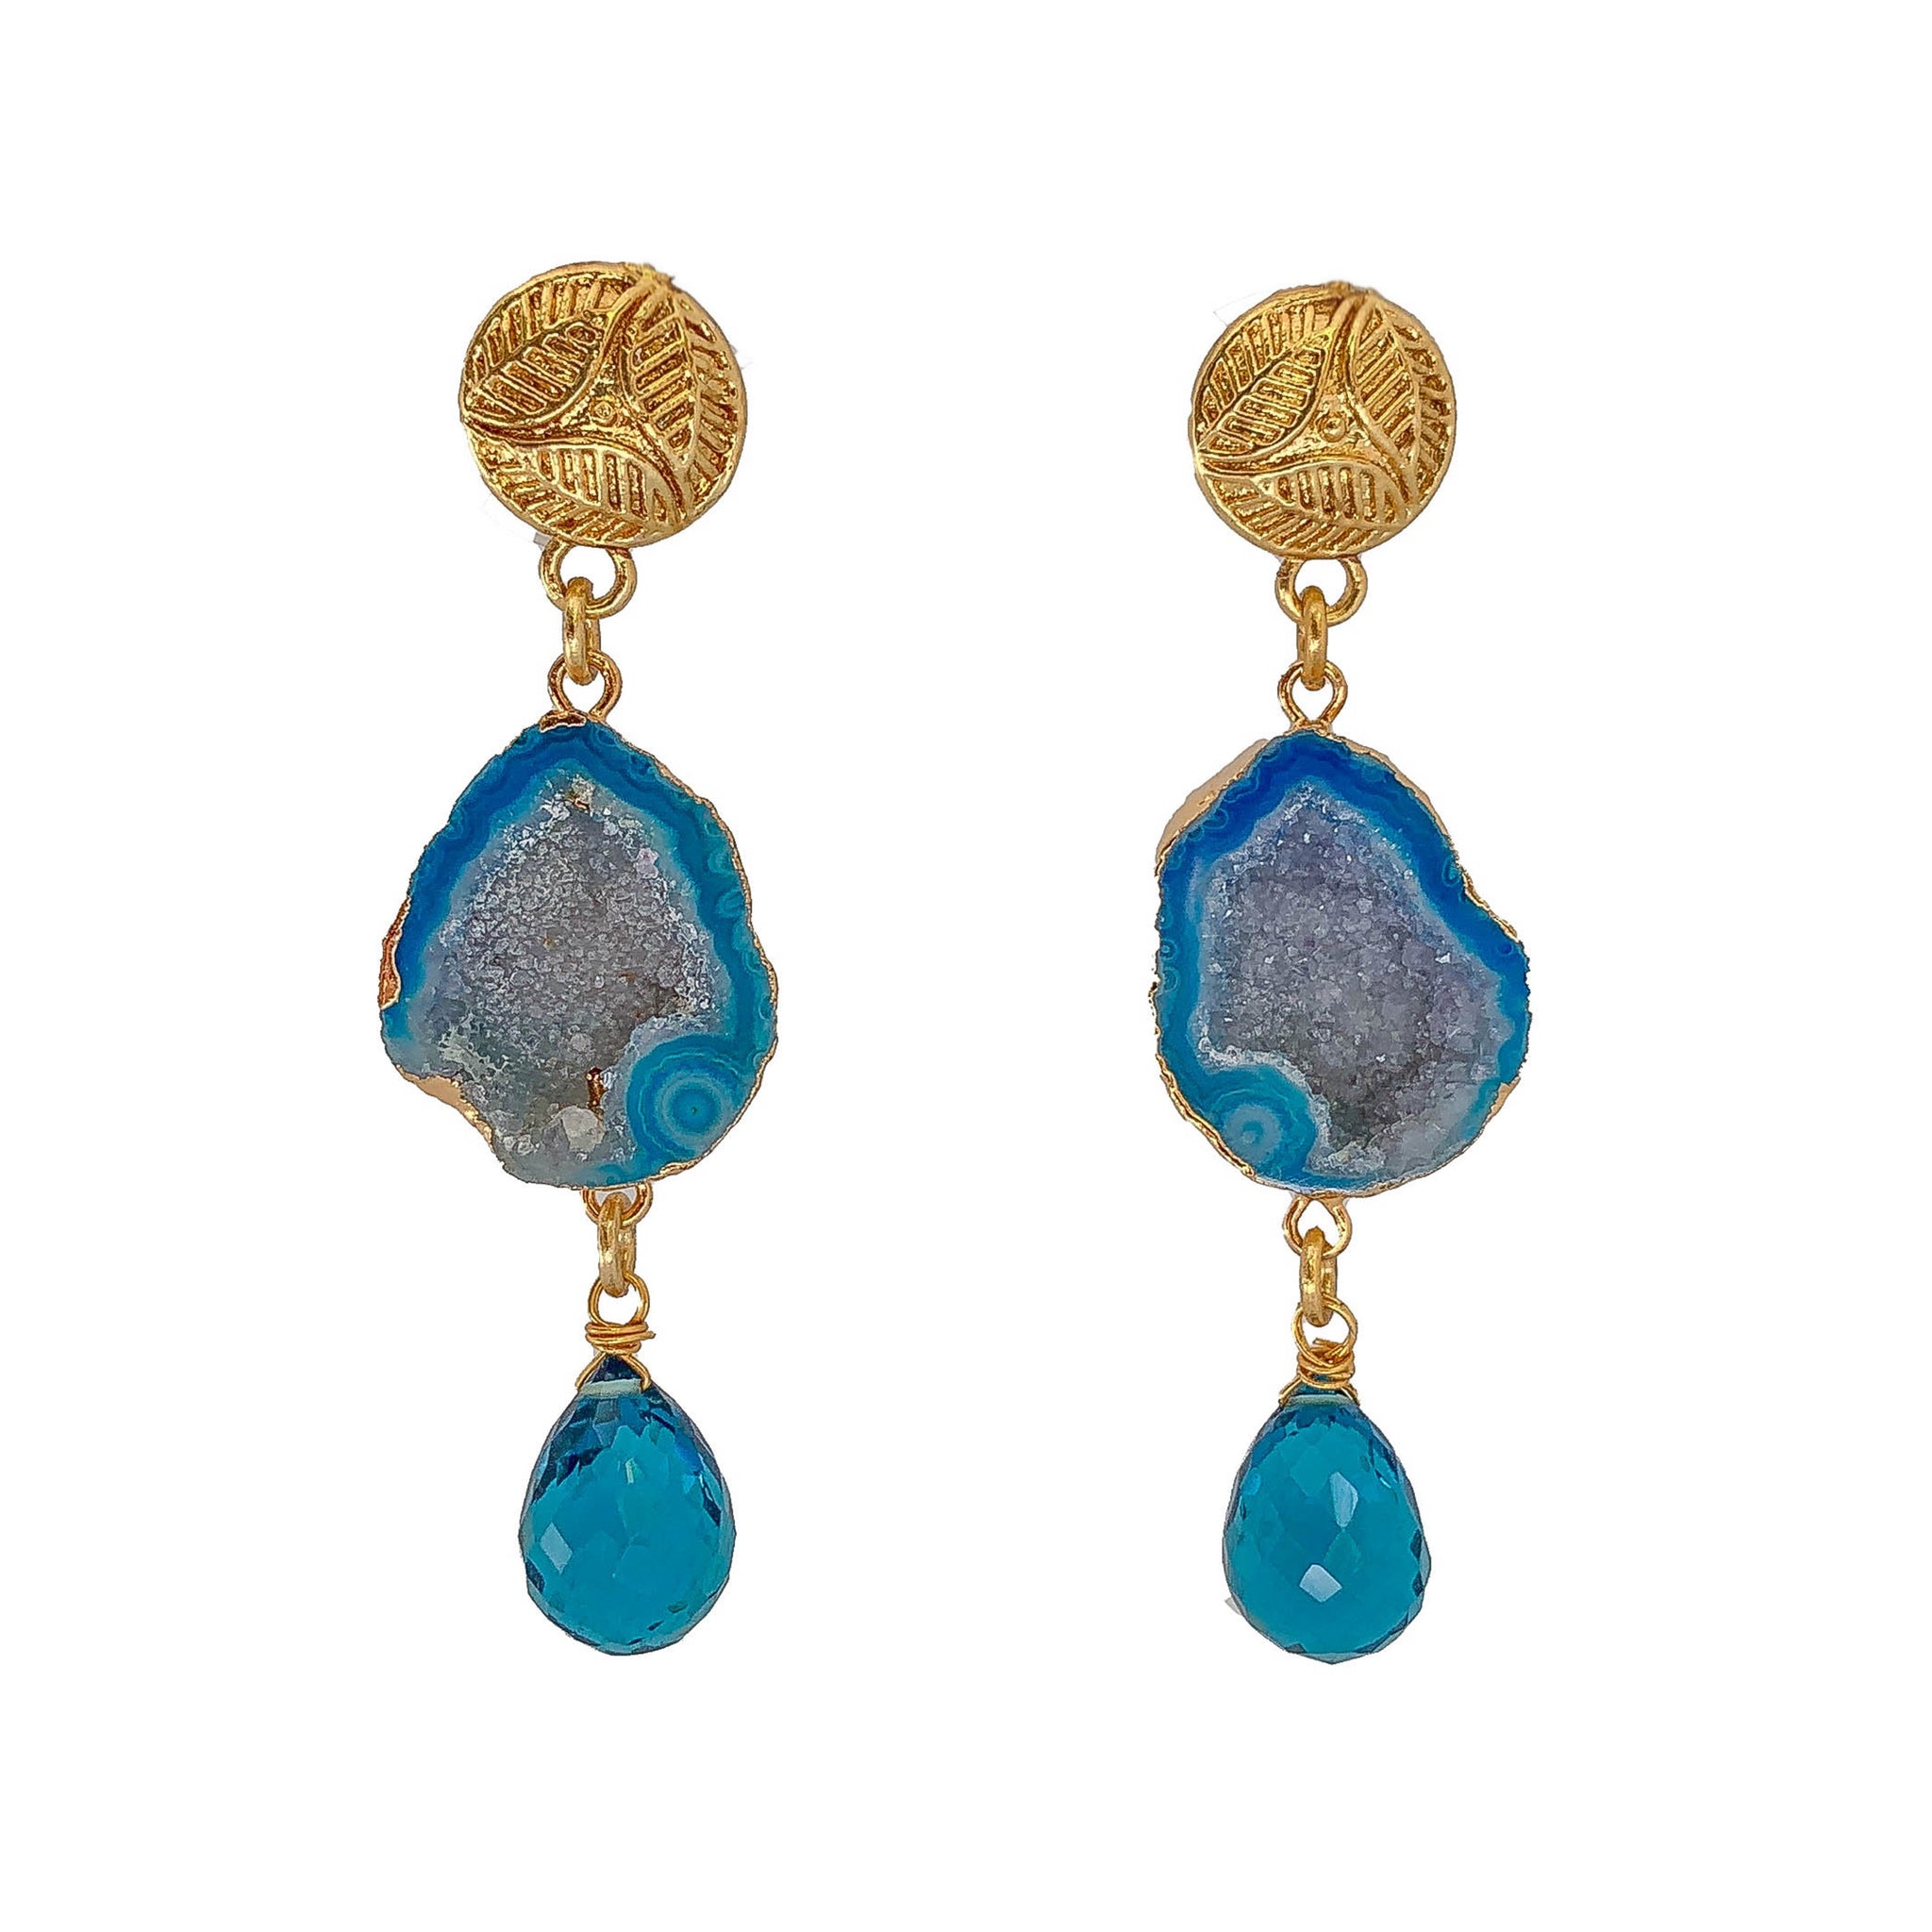 handmade gemstone earrings | unique earrings | artisan handcrafted earrings by tanya litkovska